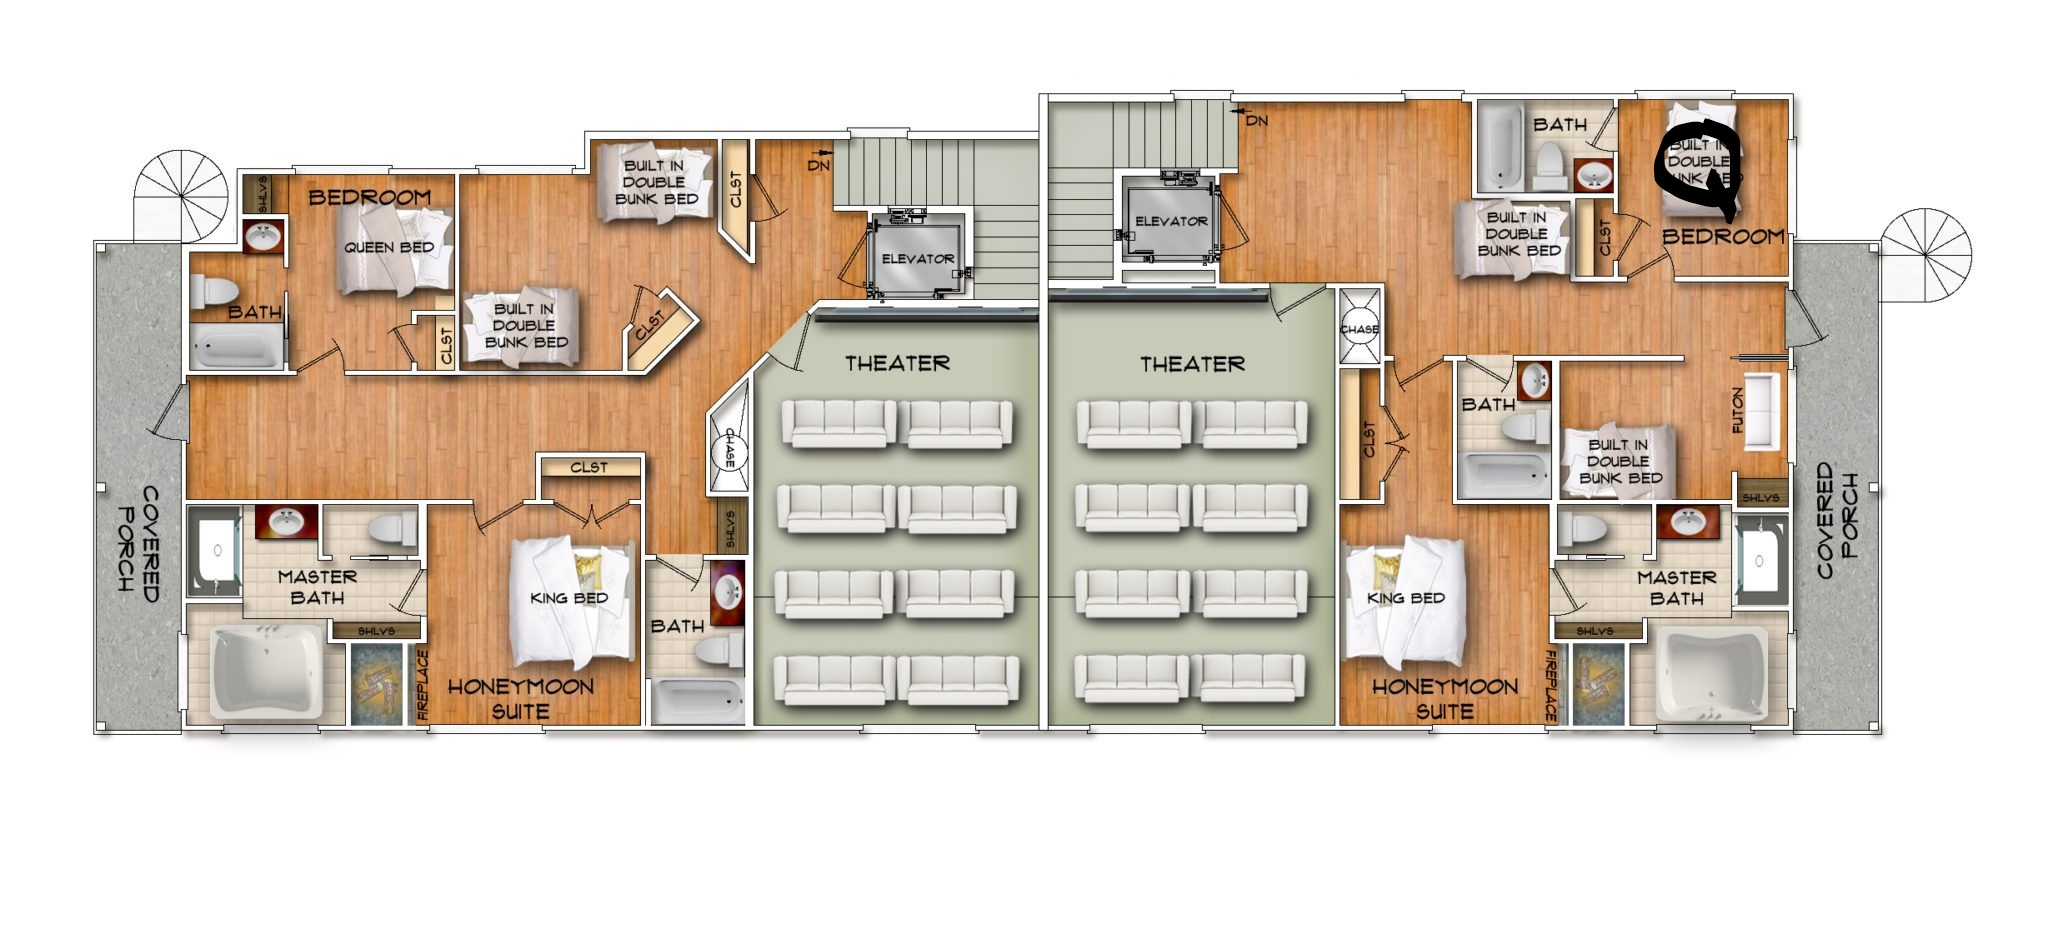 225 20th Avenue - Unit A floor plan